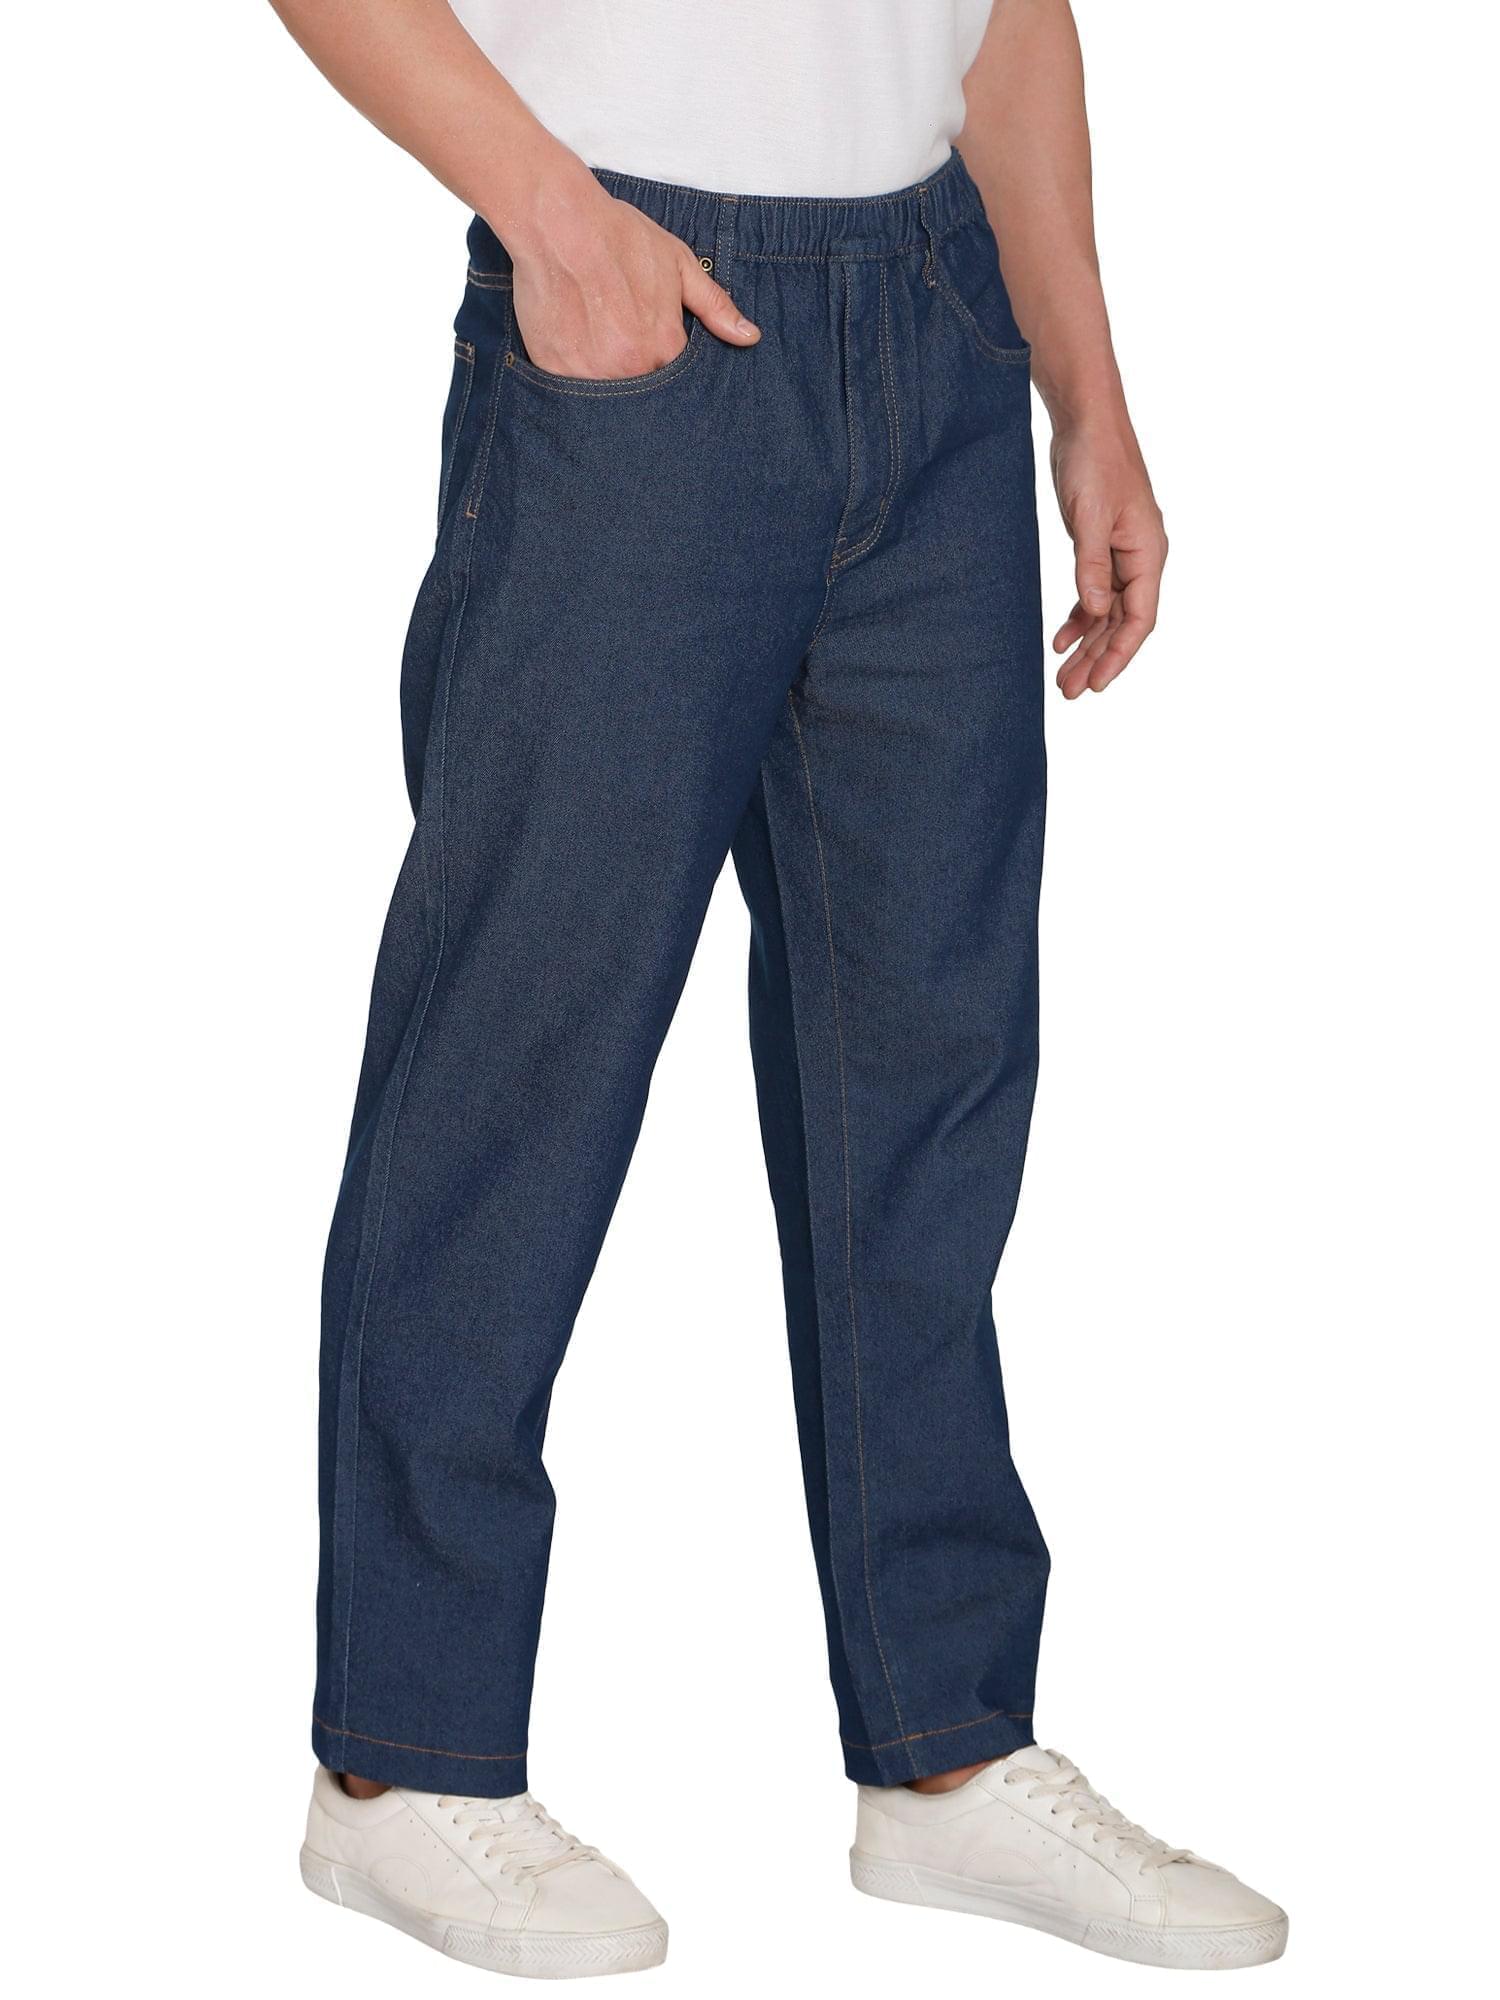 Turtle Bay New York Men's Casual Elastic Waist Denim & Twill Pull on Jeans  Pants